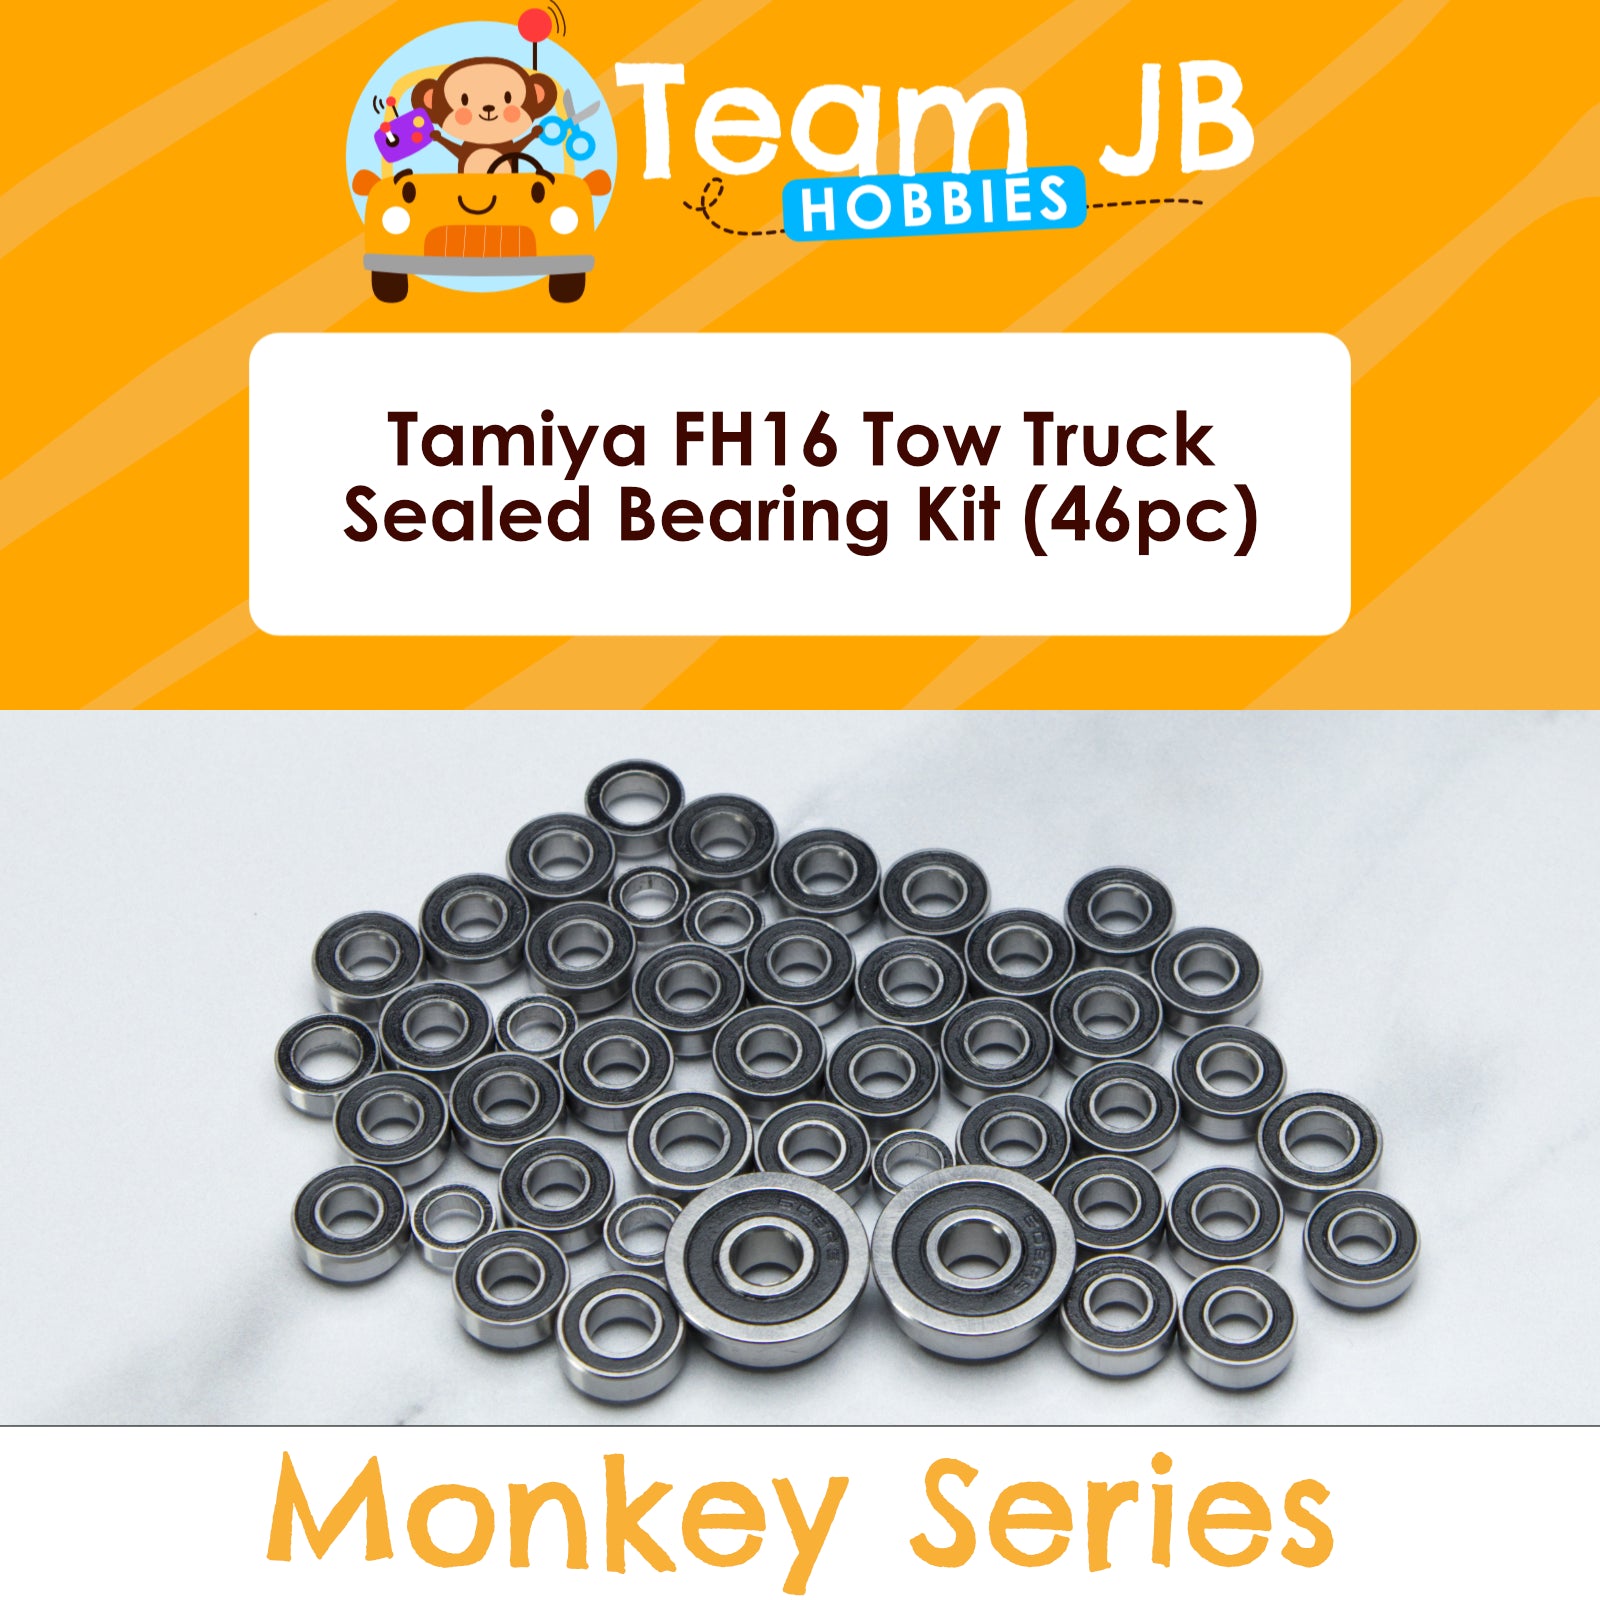 Tamiya FH16 Tow Truck - Sealed Bearing Kit